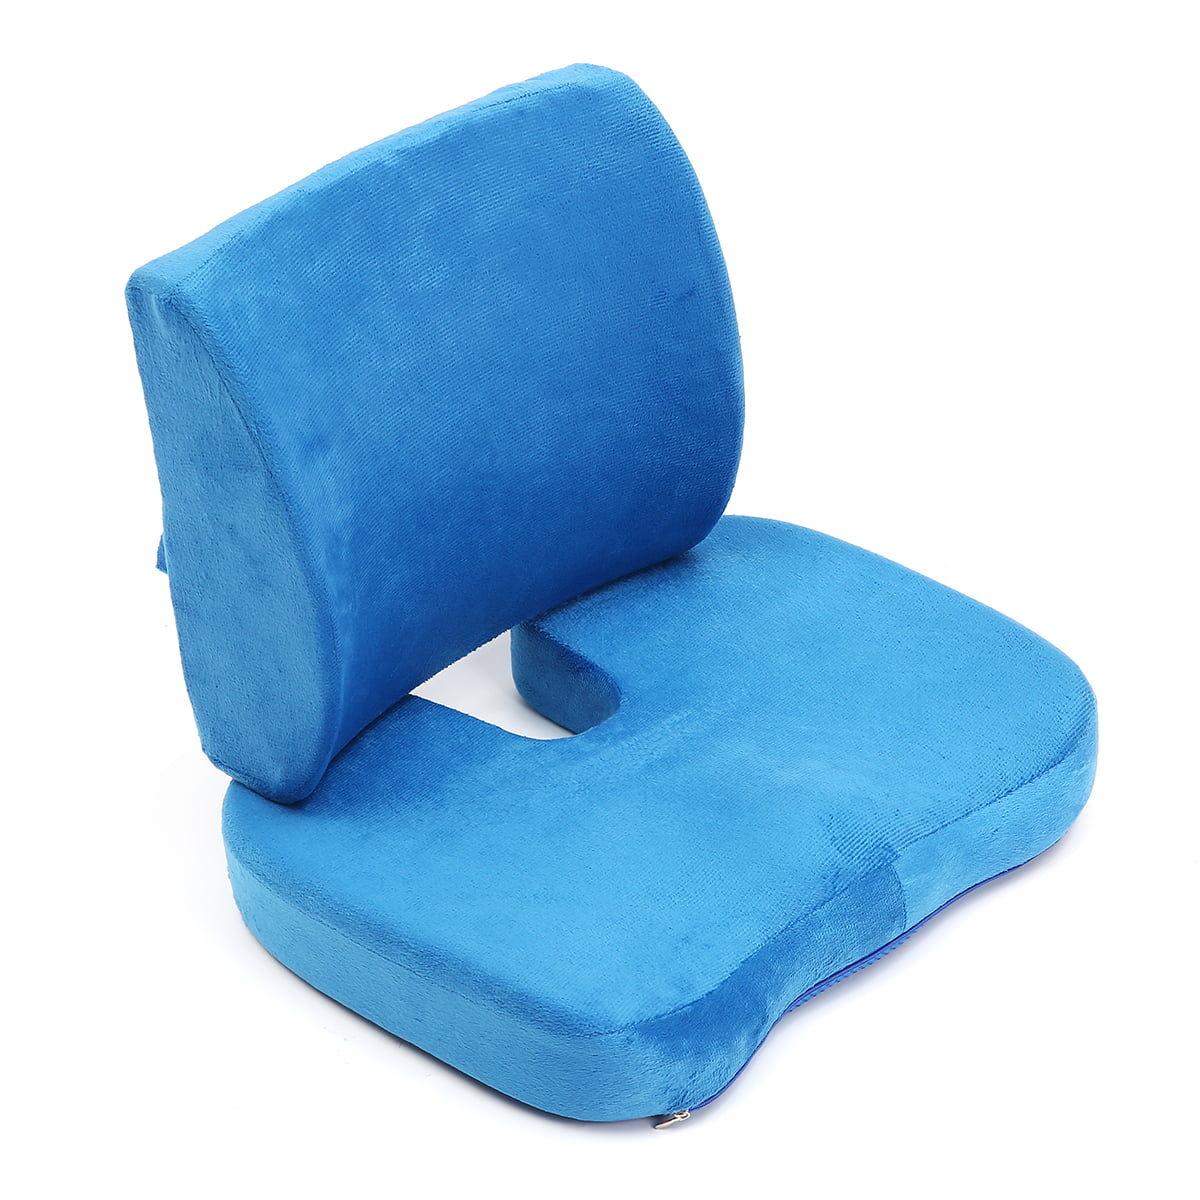 Kwanshop 2pcs Premium Memory Foam Seat Cushion Lumbar Back Support Home